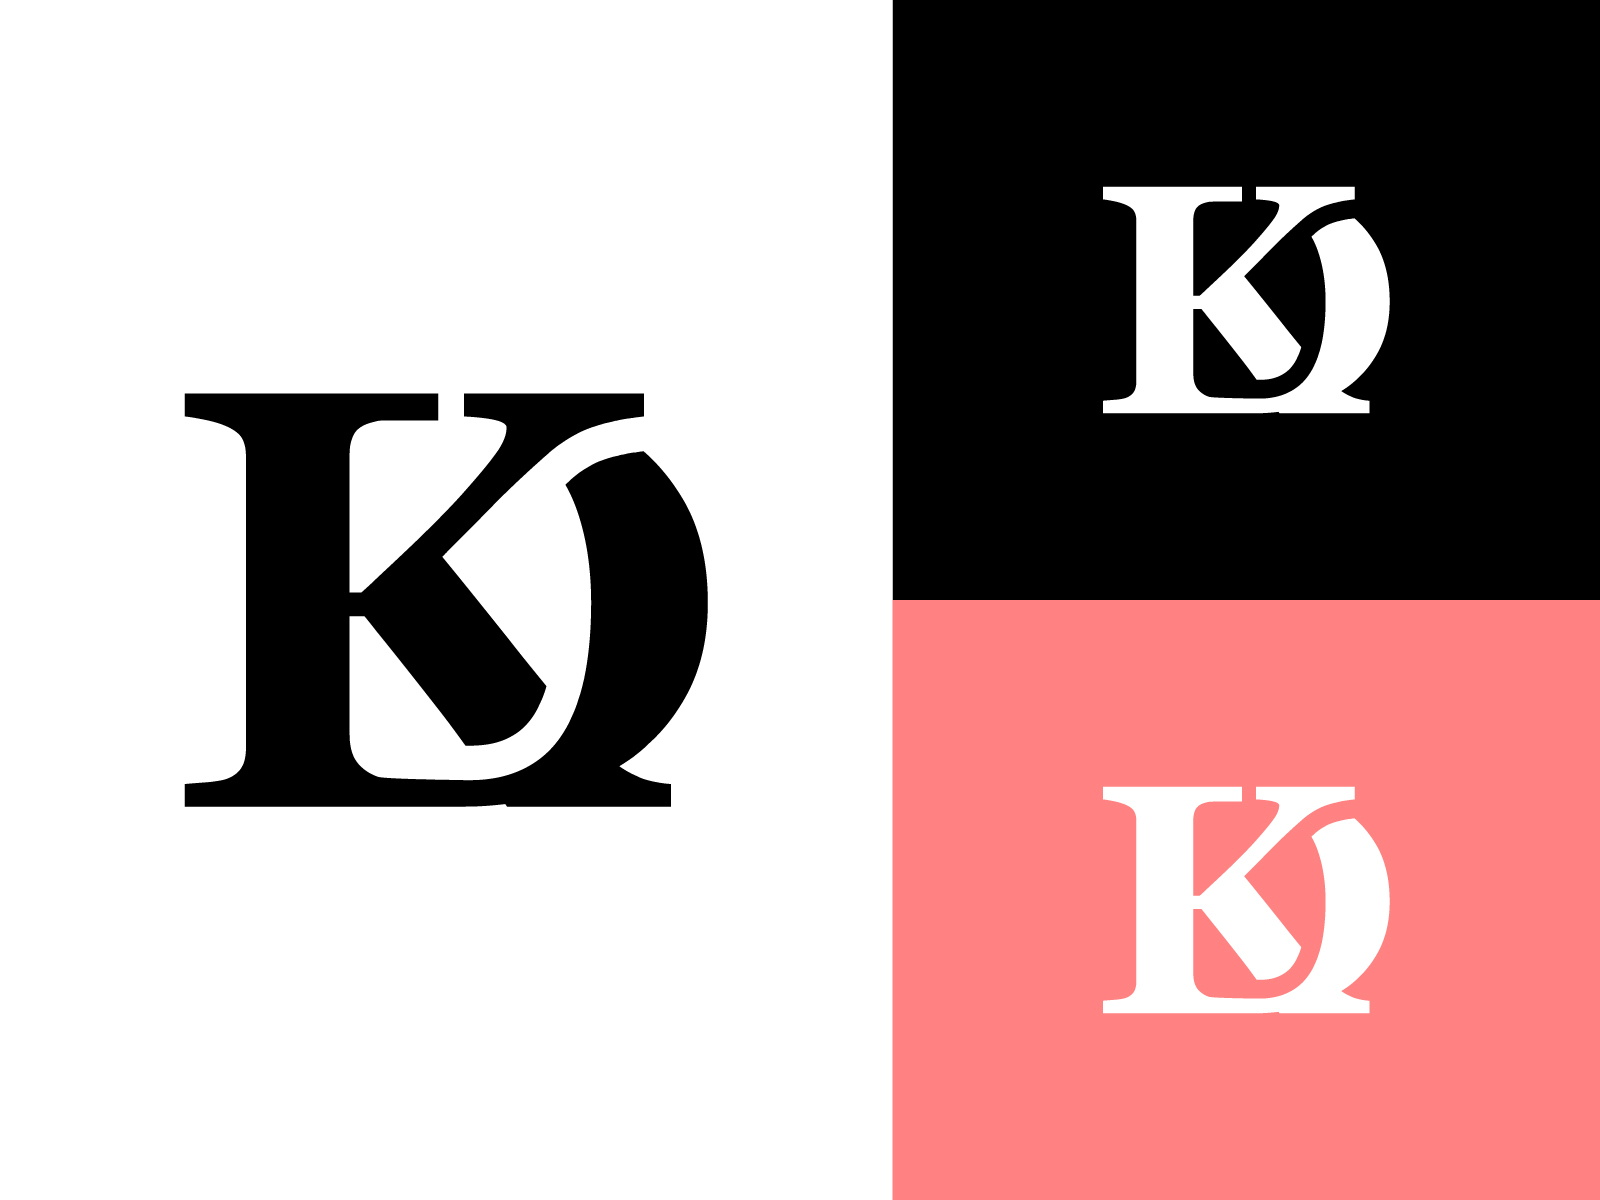 Kd Logos PNG Transparent Images Free Download | Vector Files | Pngtree